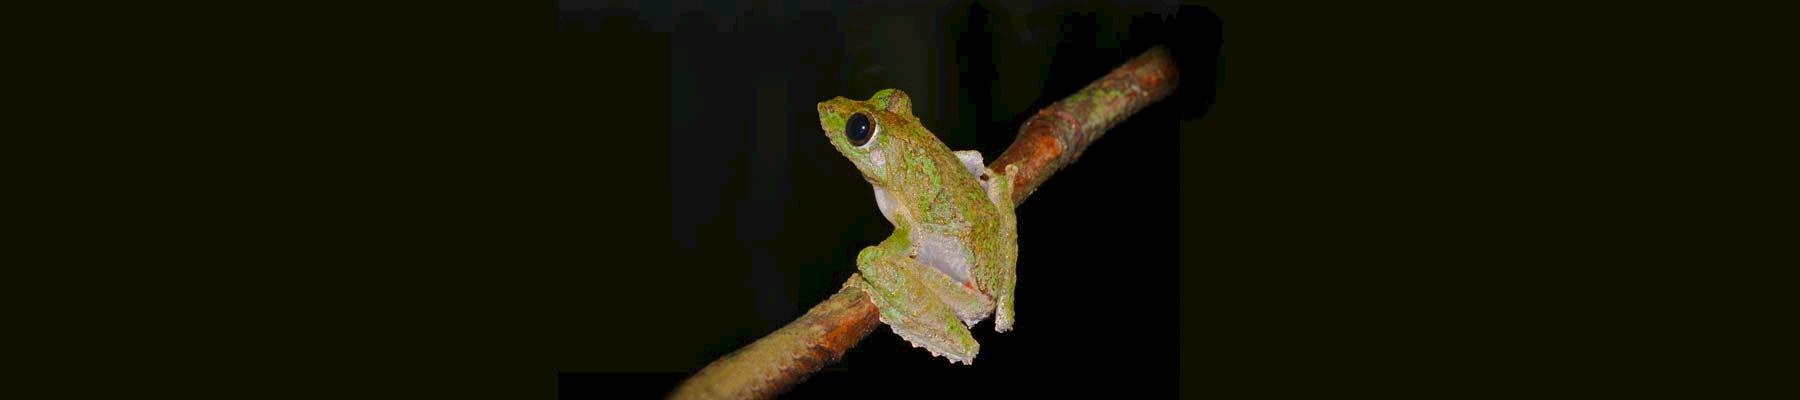 Frilled Tree Frog Rhacophorus appendiculatus © Bernard DUPONT/CC BY-SA 2.0